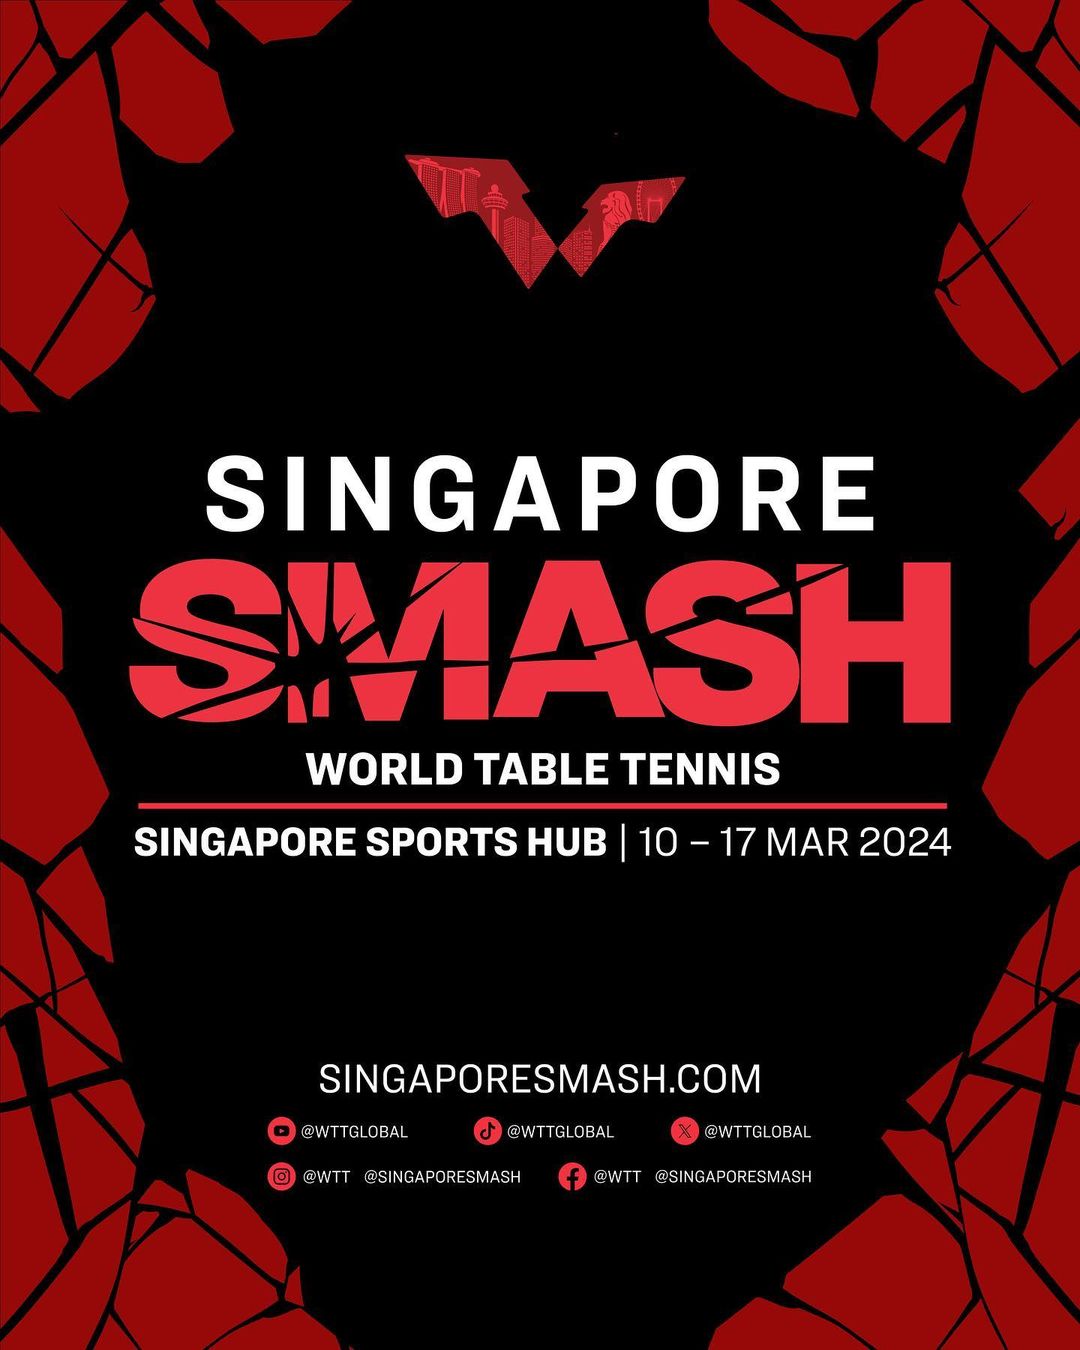 WTT Singapore Smash 2024 coming in March! TT Crunch